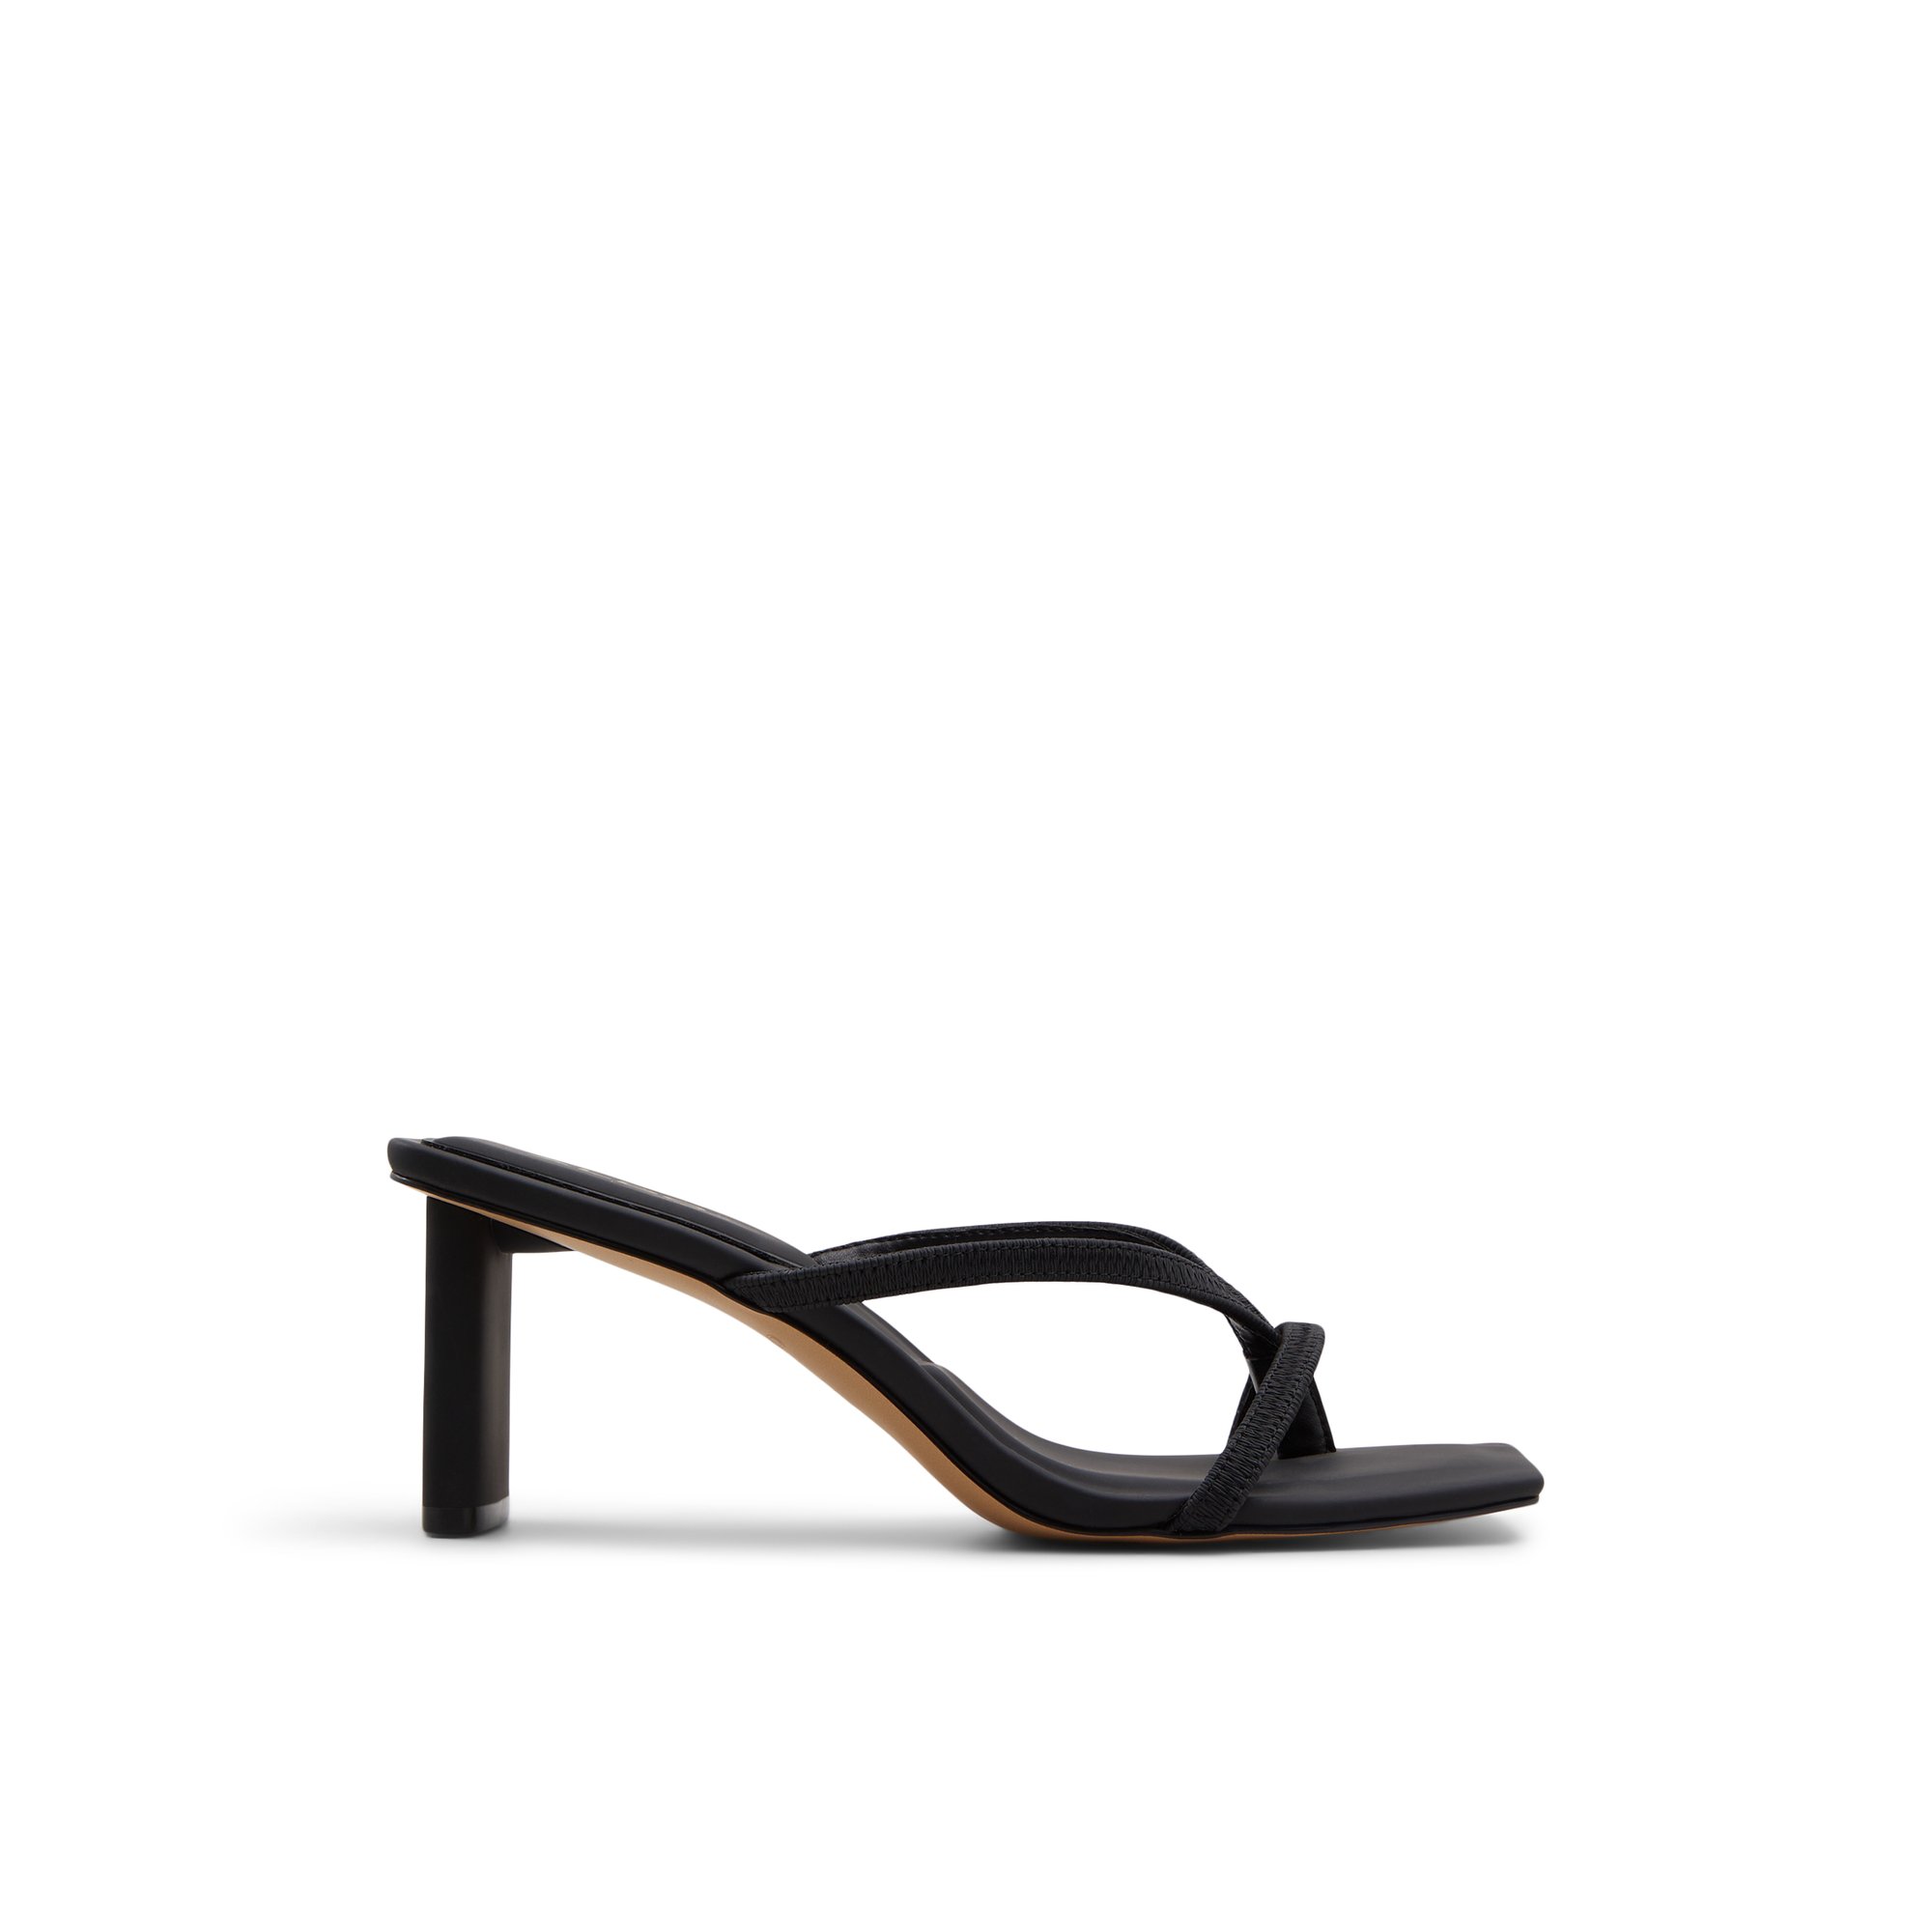 ALDO Sanne - Women's Strappy Sandal Sandals - Black